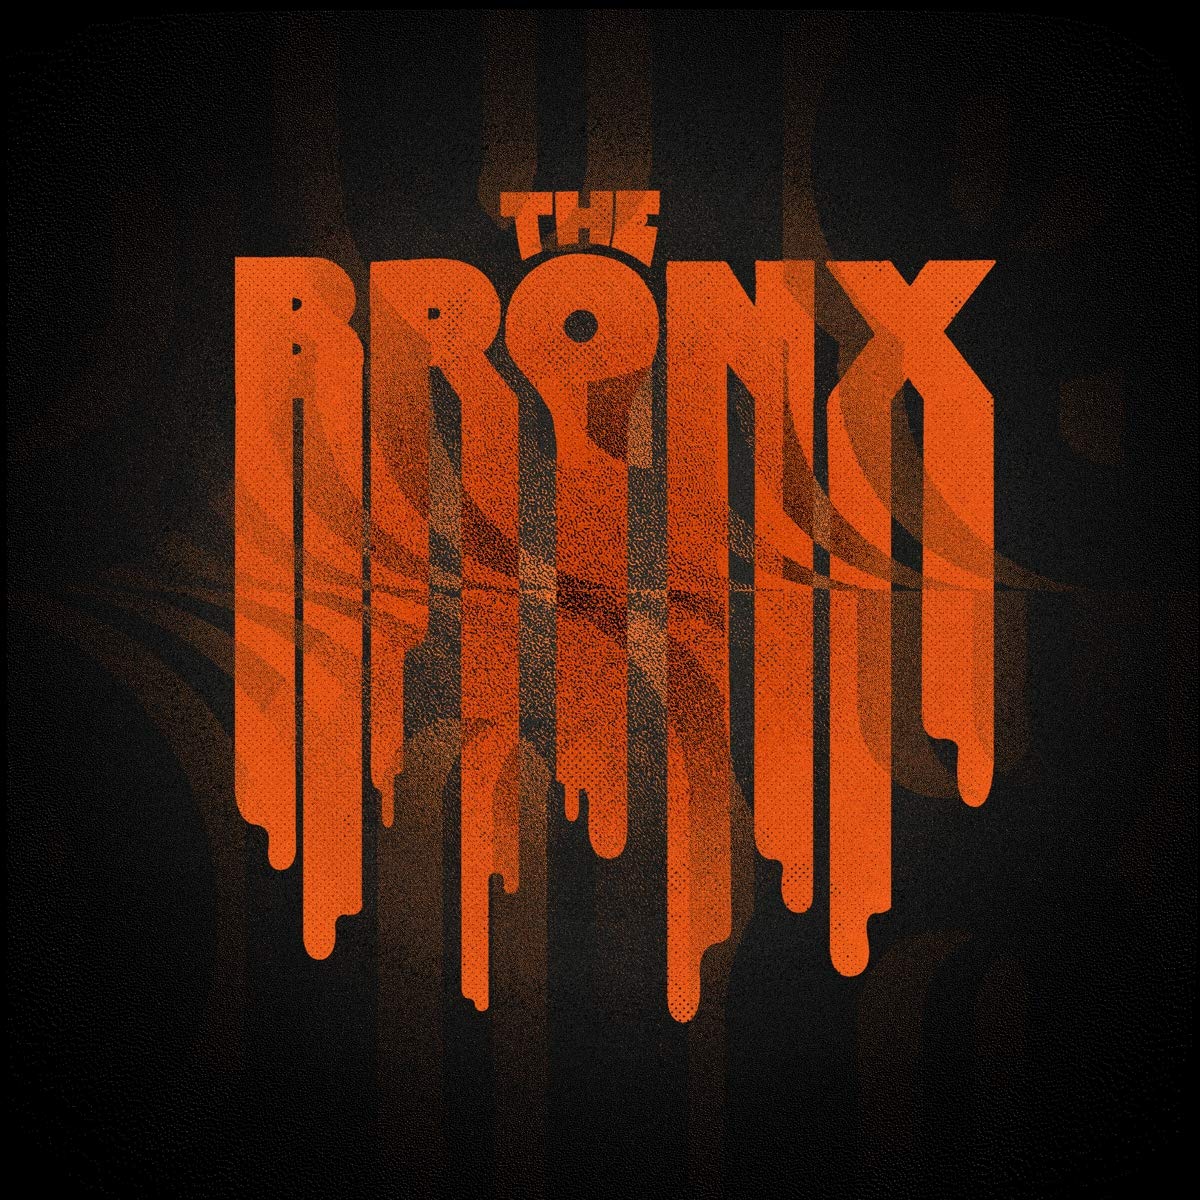 THE BRONX - THE BRONX (Orange Vinyl) LP